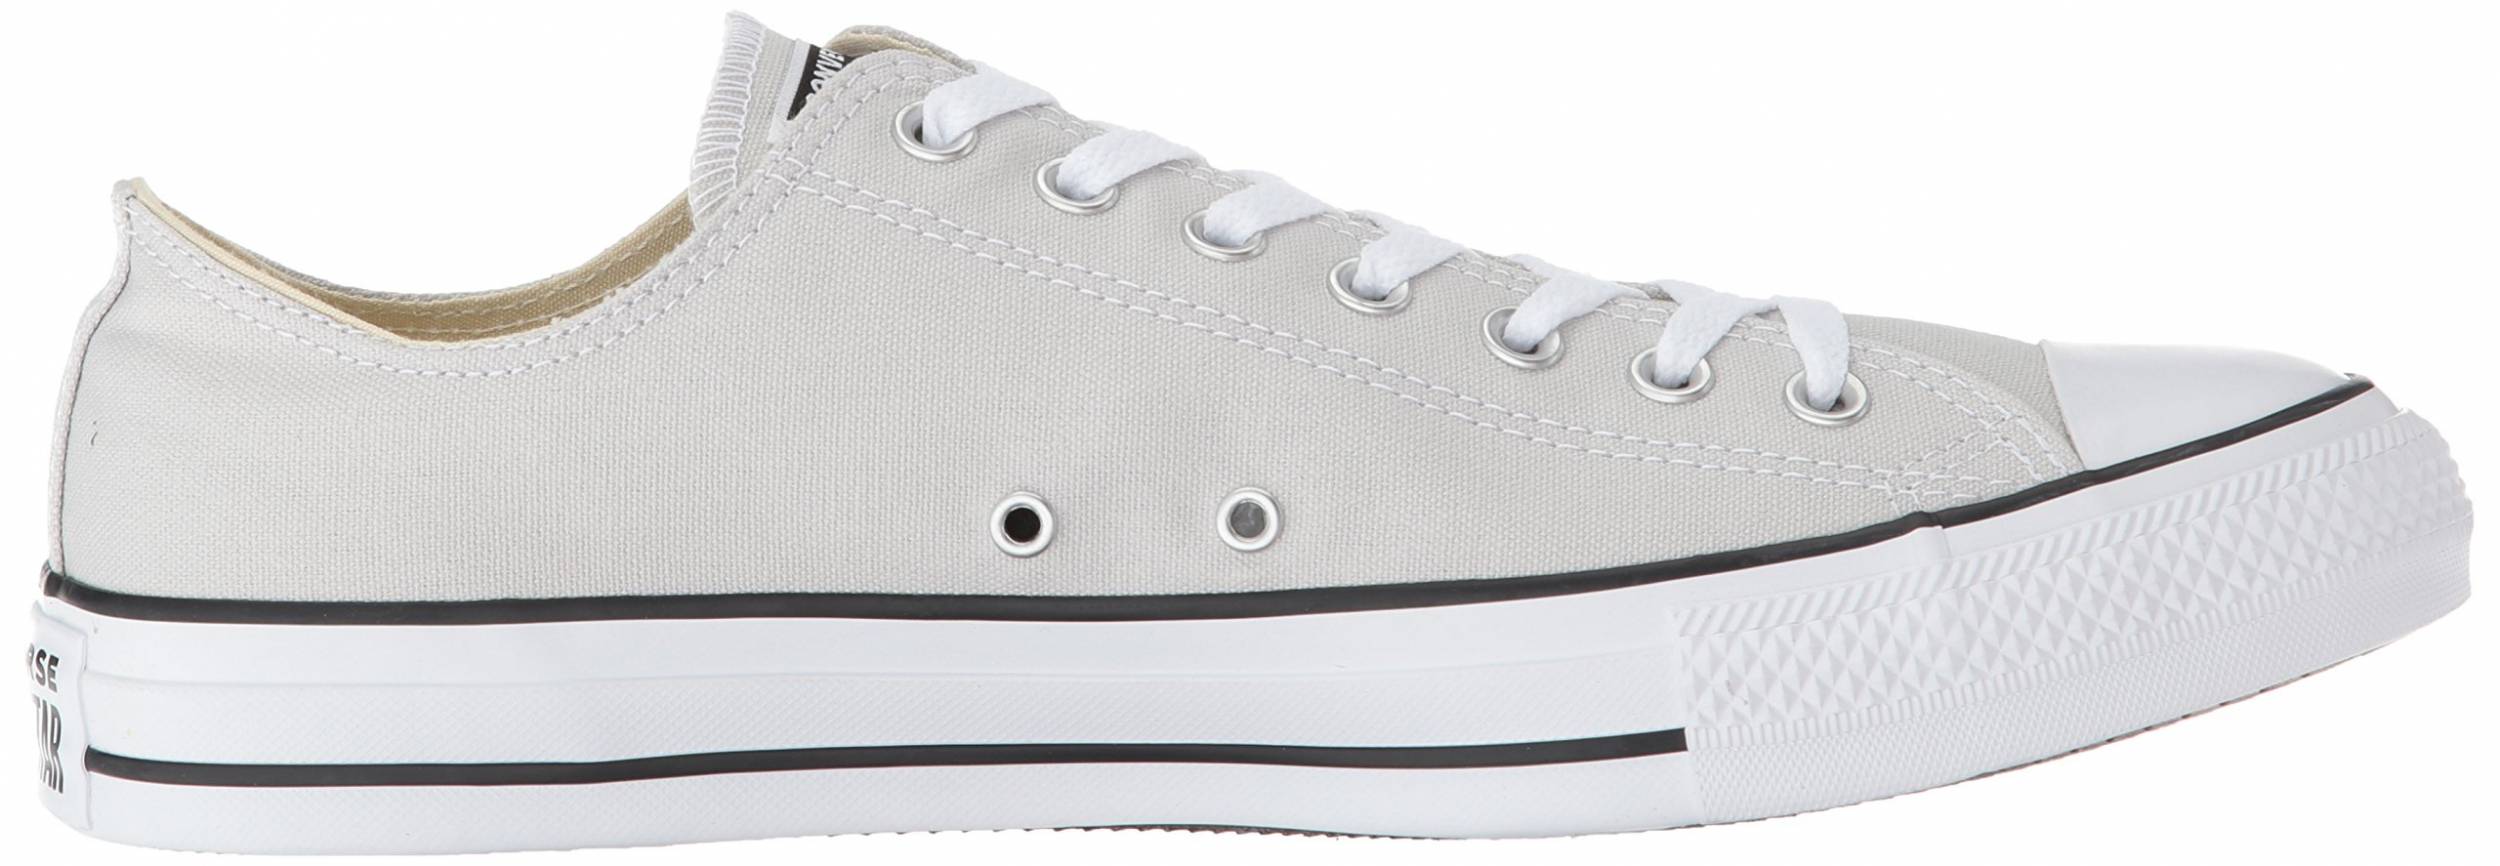 ladies white converse shoes